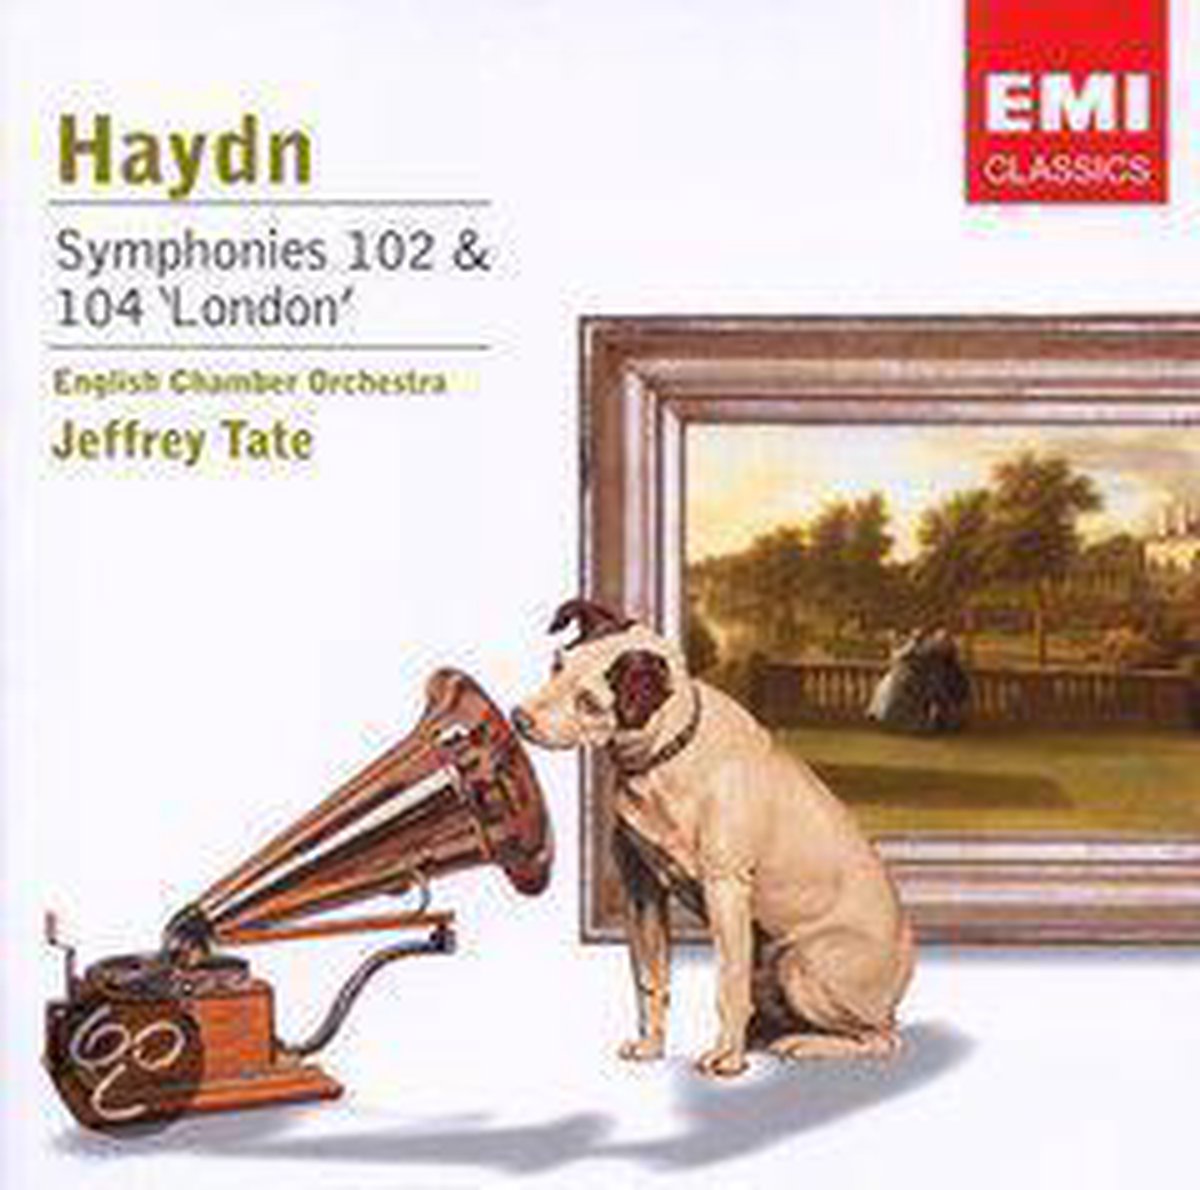 Haydn: Symphonies 102 & 104 07 - Jeffrey Tate